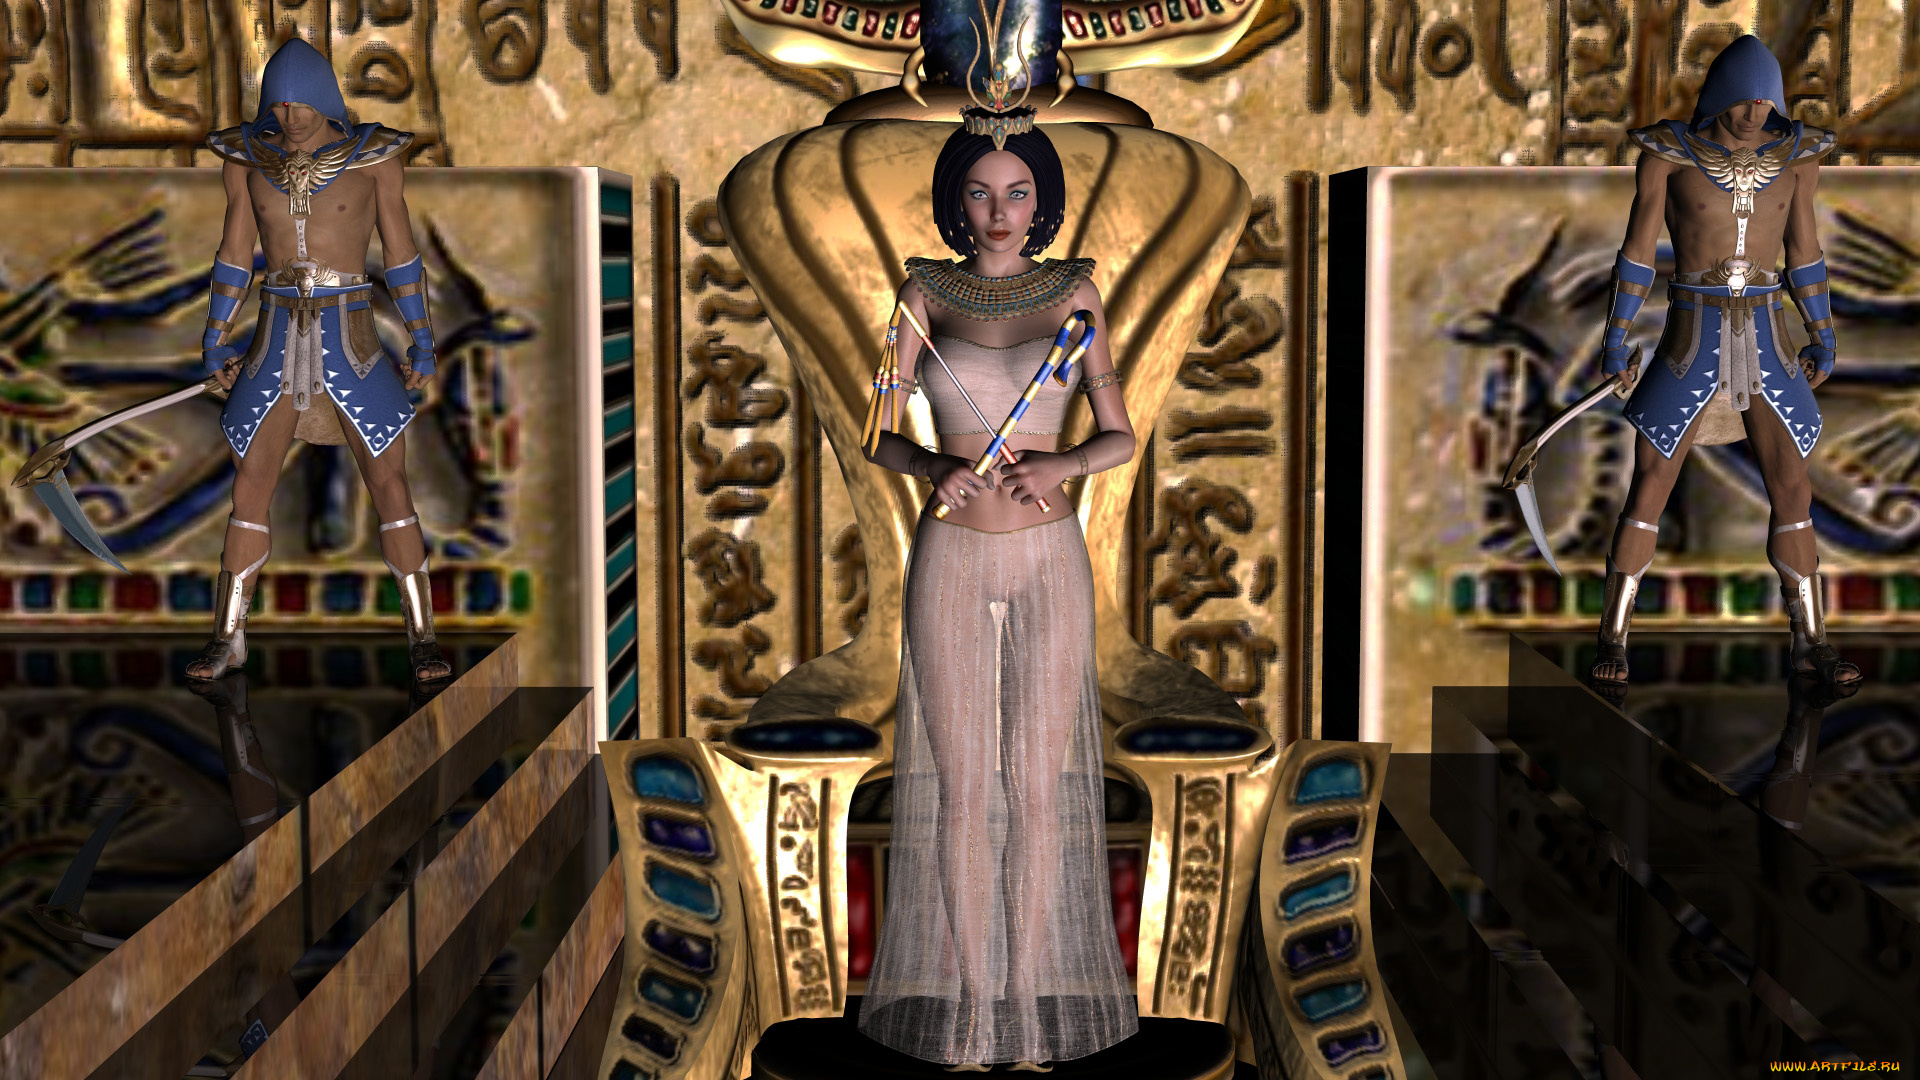 elizabeth, queen, of, the, nile, 3д, графика, fantasy, , фантазия, девушка, взгляд, трон, символы, власти, воины, корона